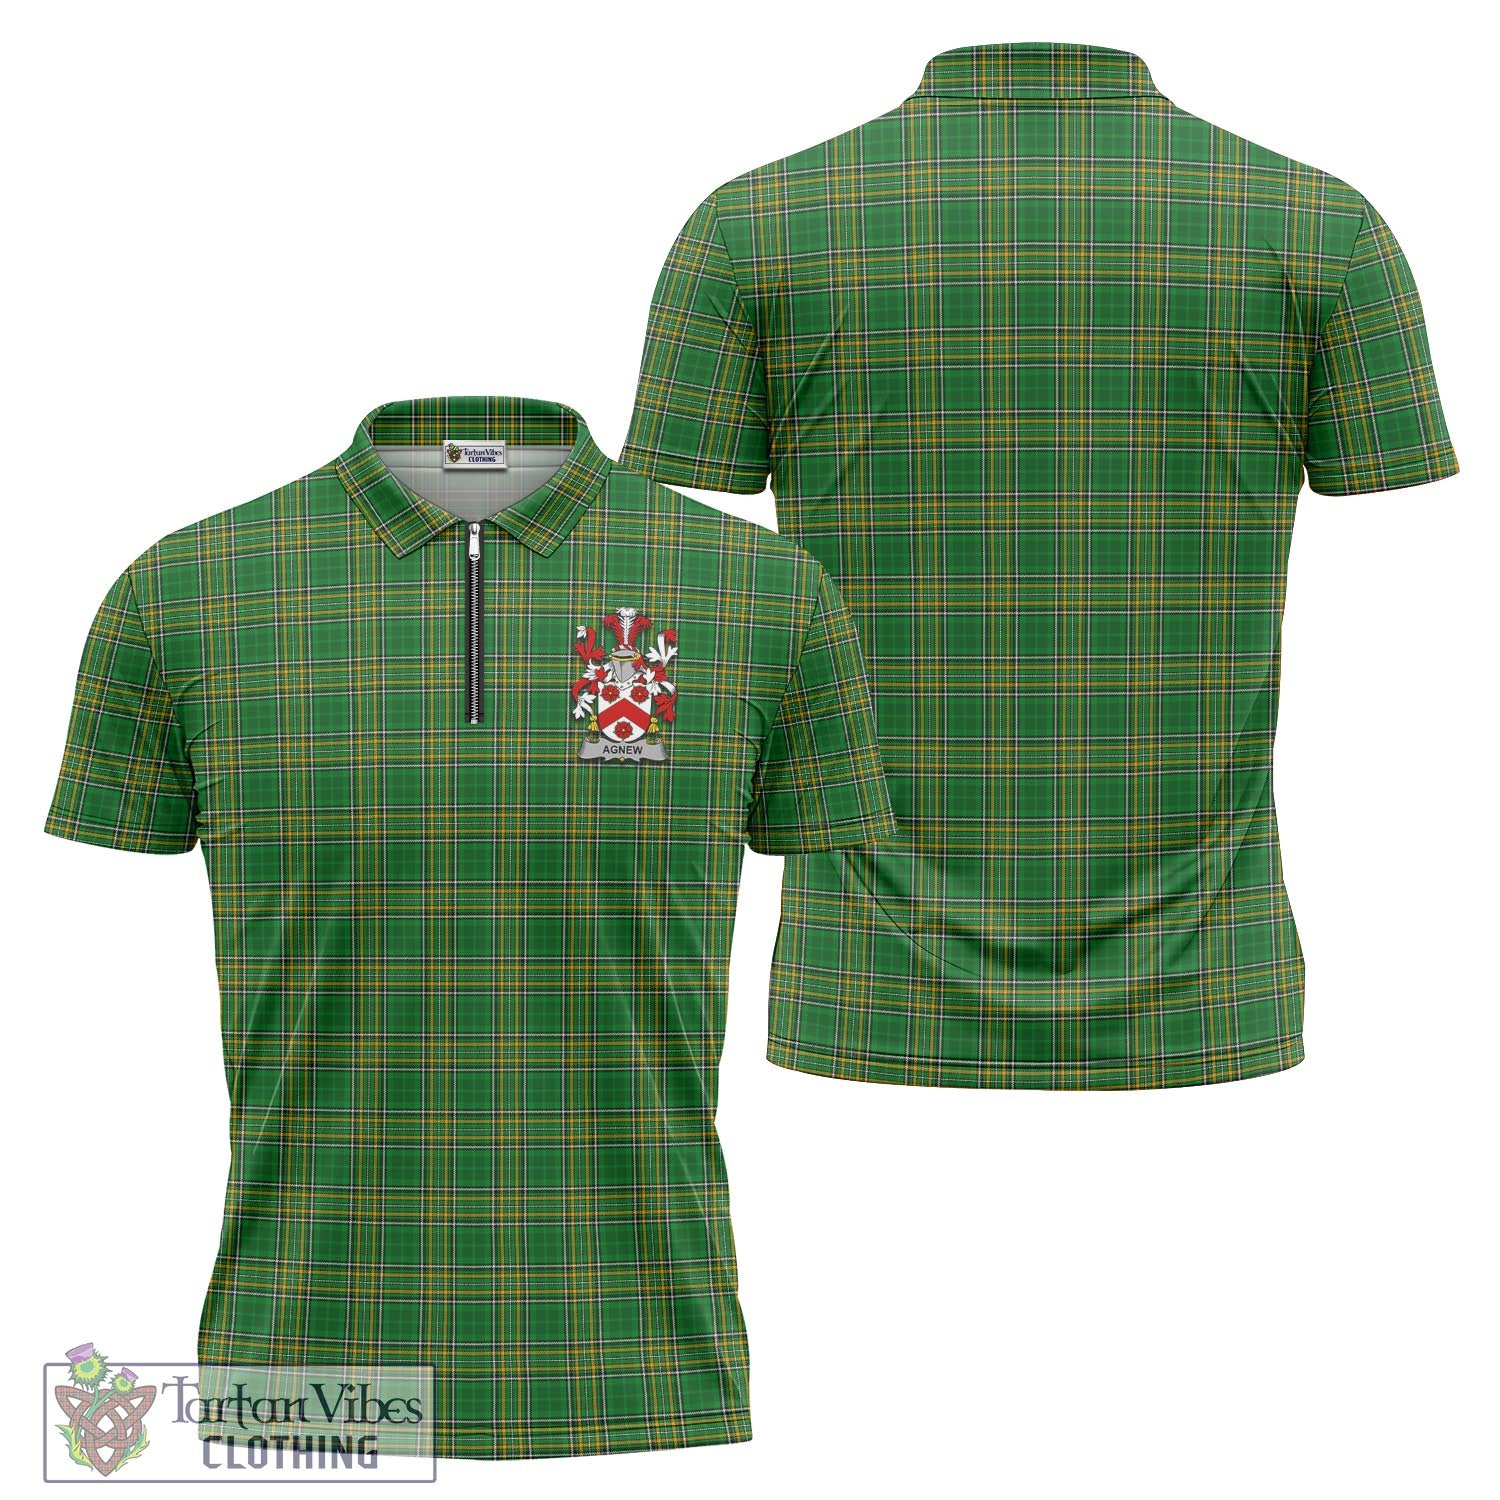 Tartan Vibes Clothing Agnew Ireland Clan Tartan Zipper Polo Shirt with Coat of Arms